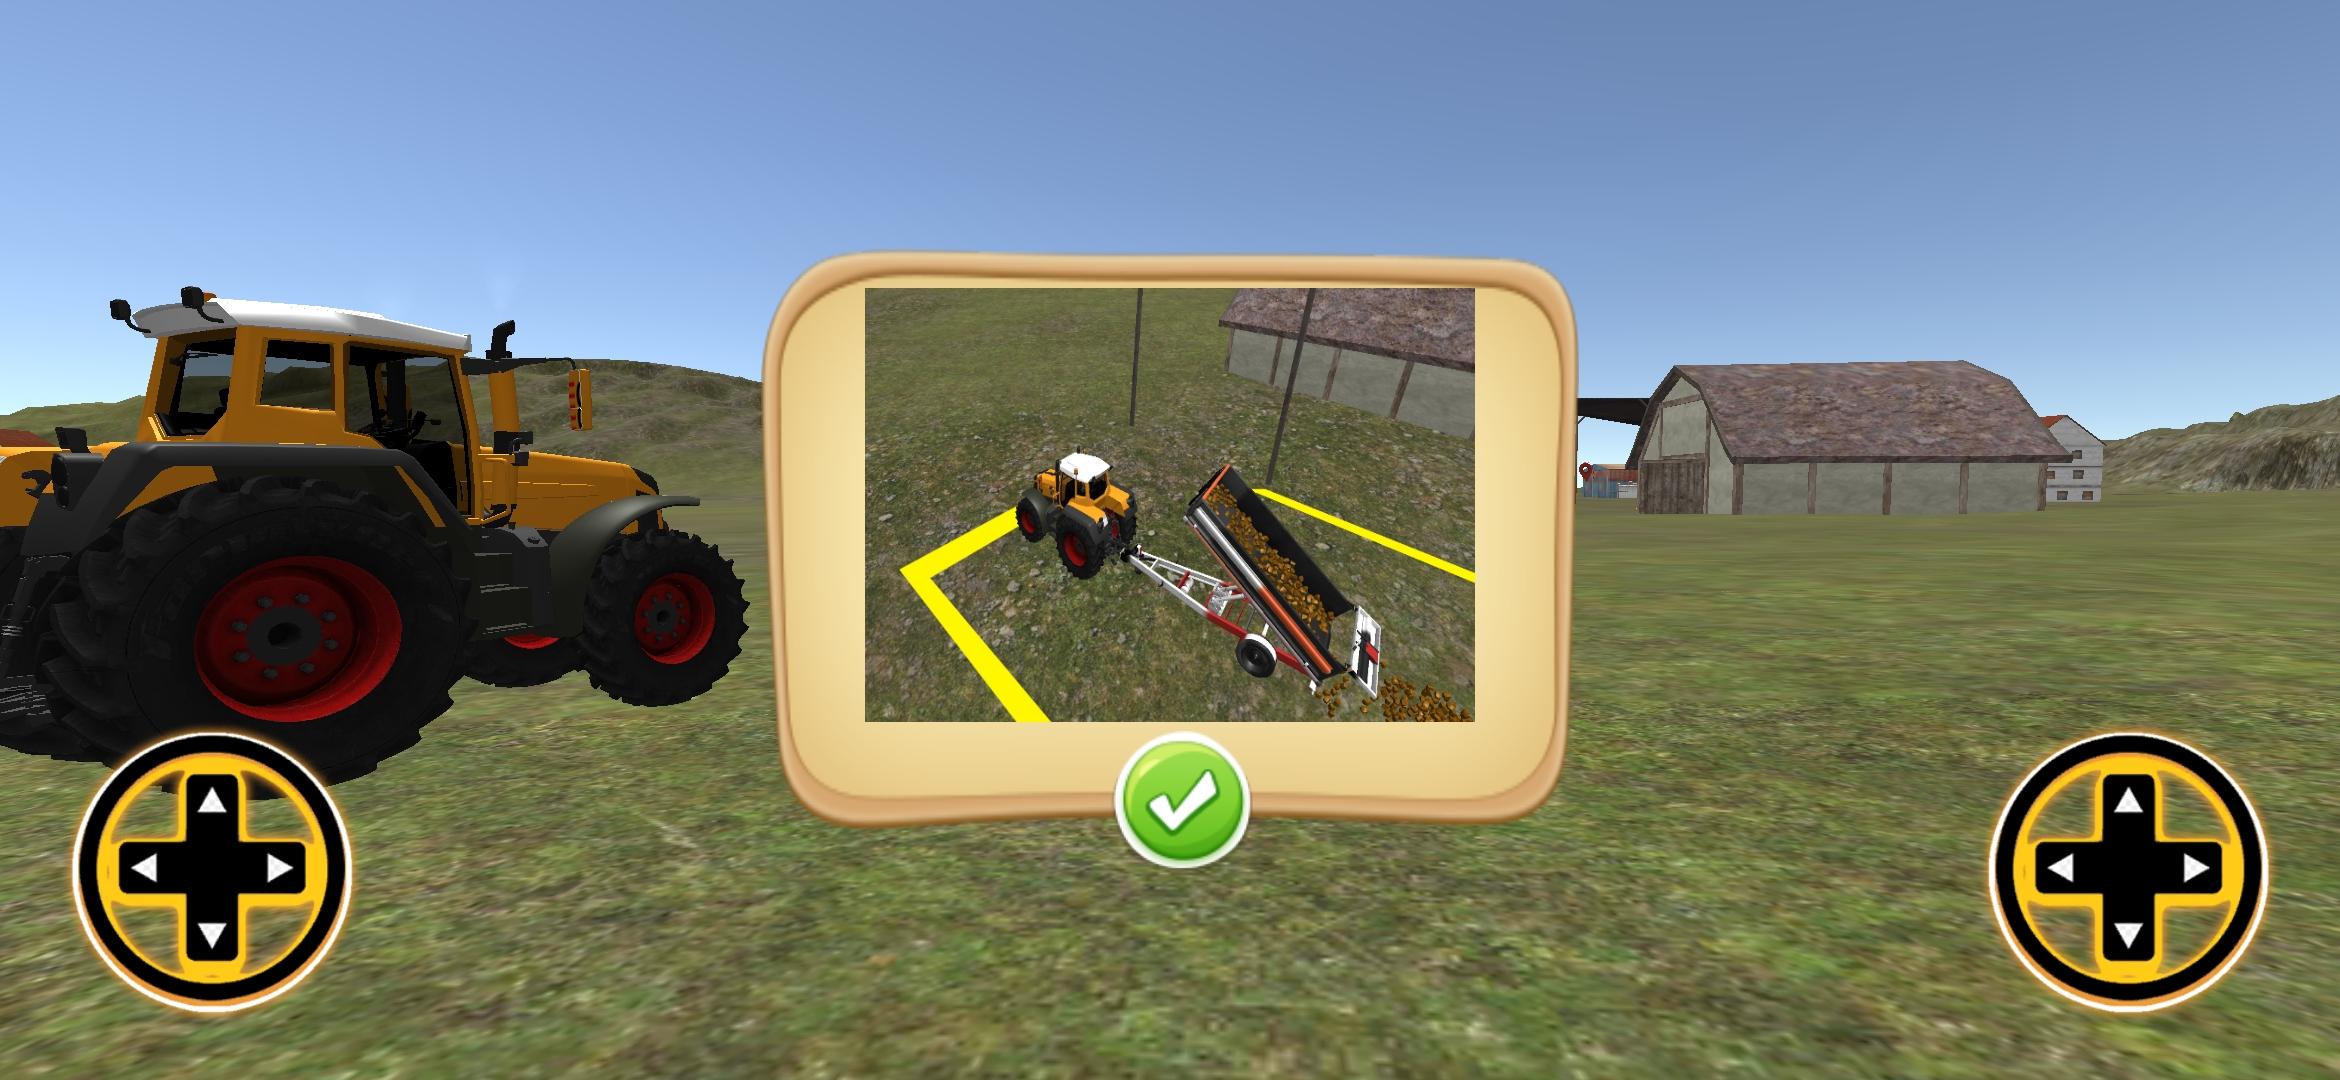 Фарминг симулятор 2021. Симулятор вождения трактора. Игра езда на тракторе ферма. Игры трактор игра на планшете. Игра трактор в марте